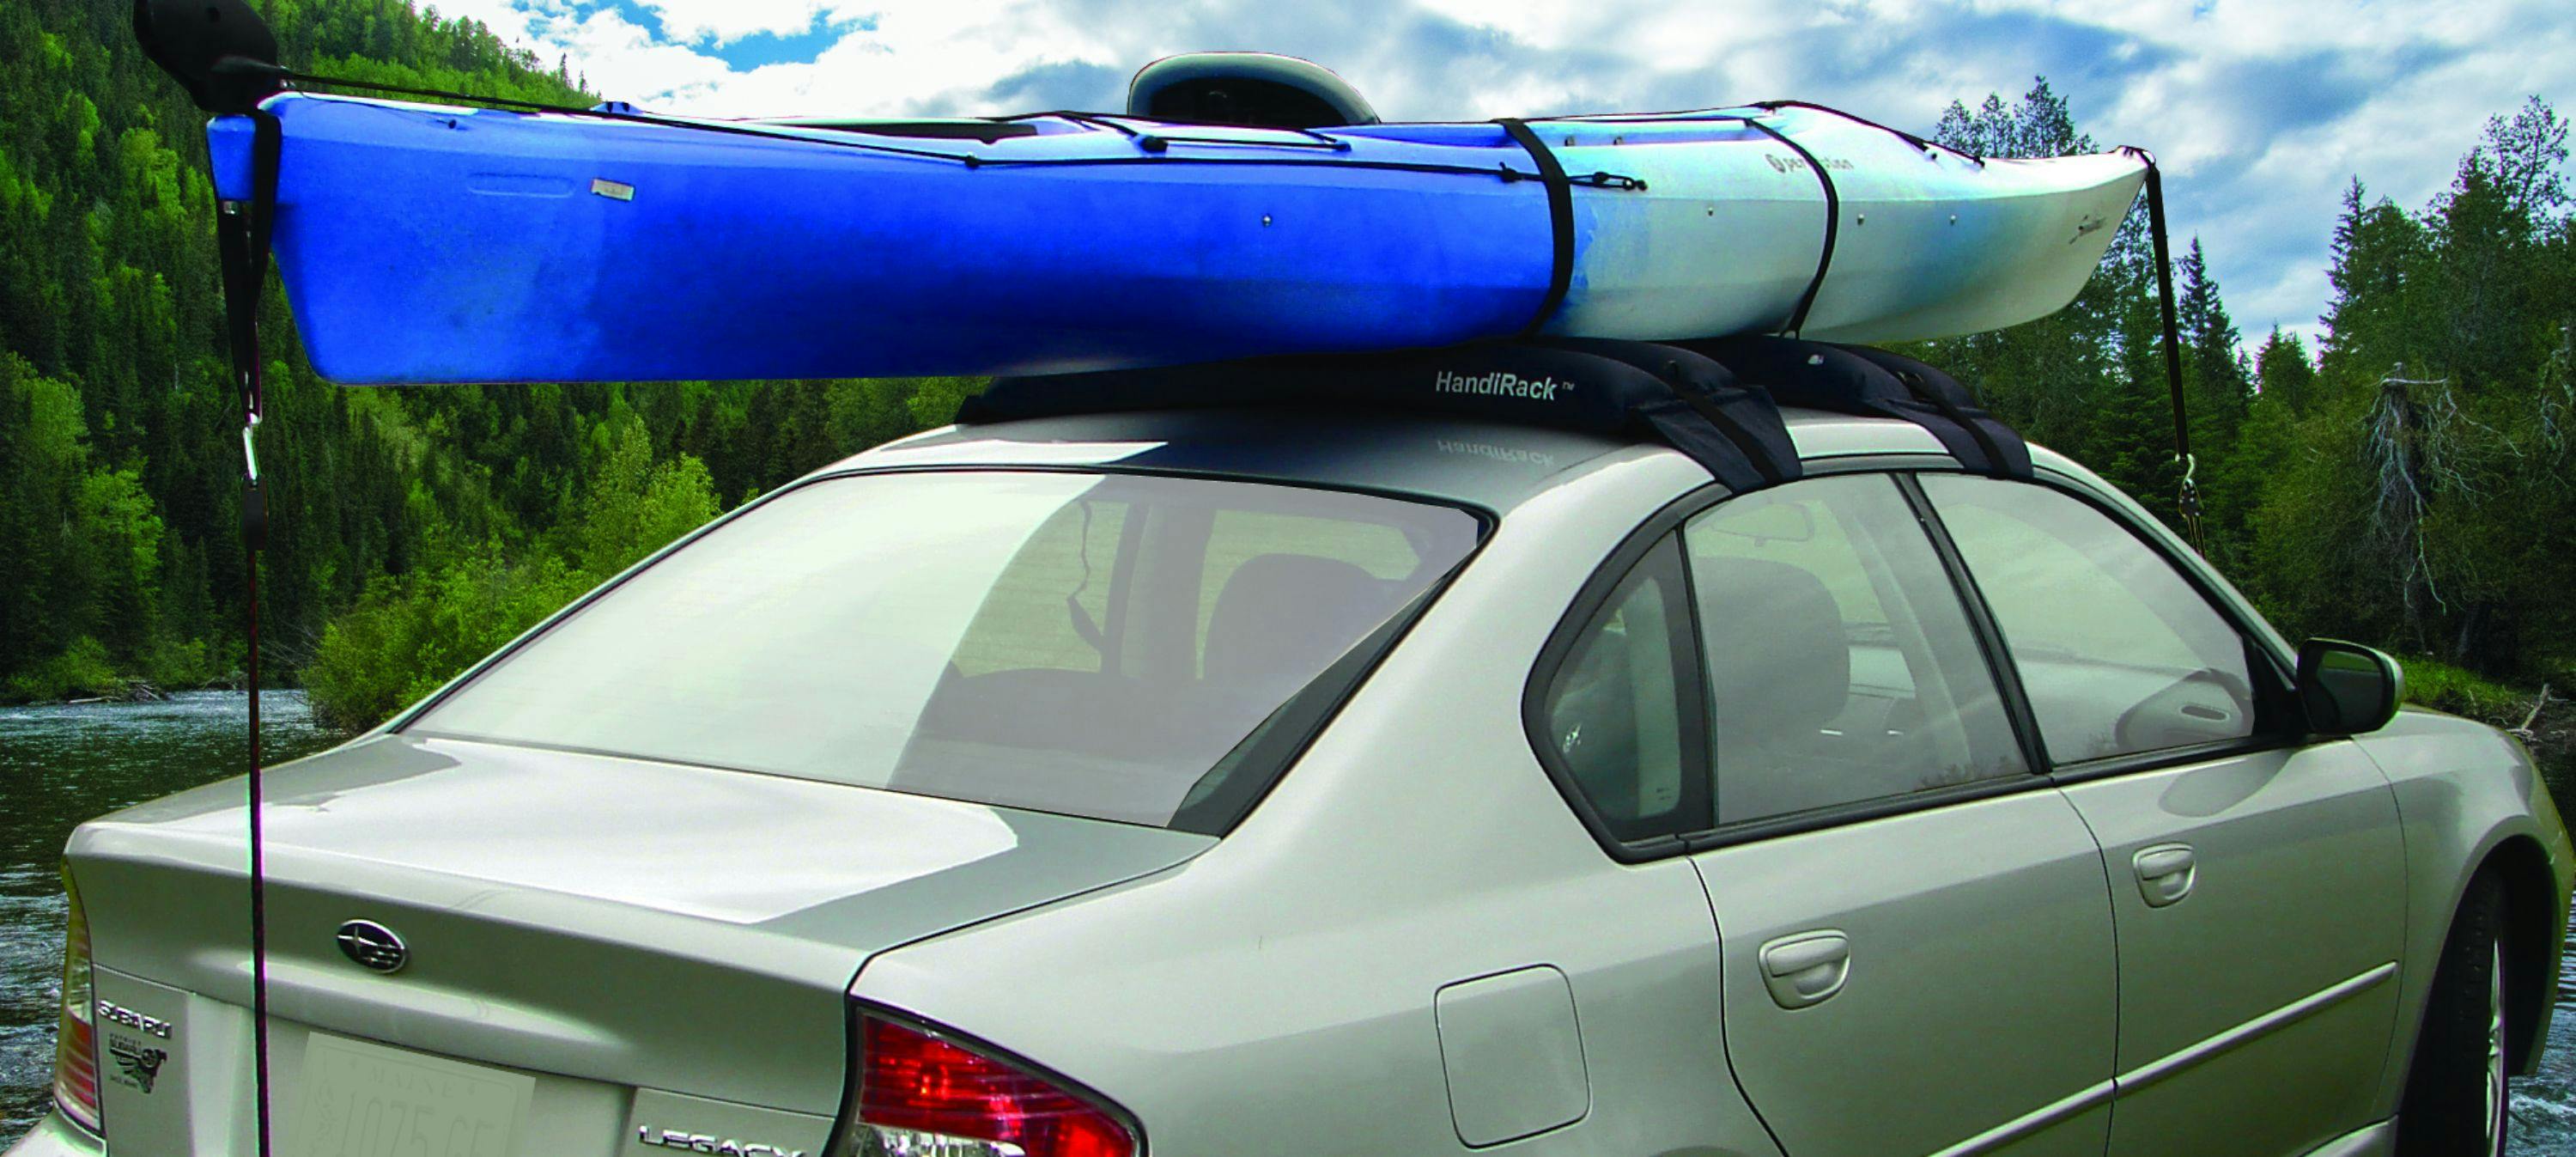 Best Inflatable: Handirack Universal Inflatable Kayak 